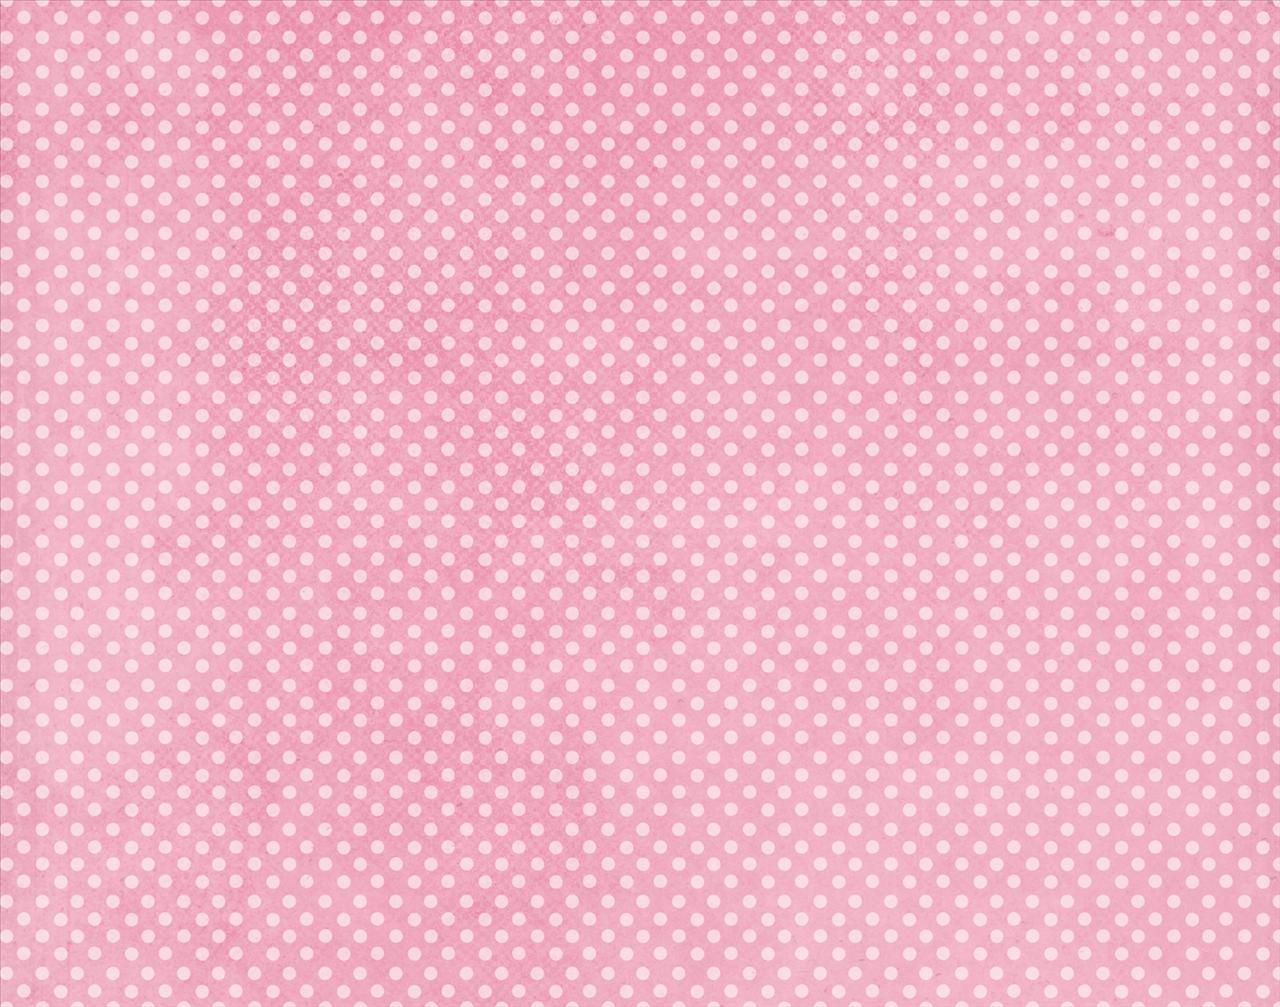 Pink Polka Dot Wallpaper Popular Photography